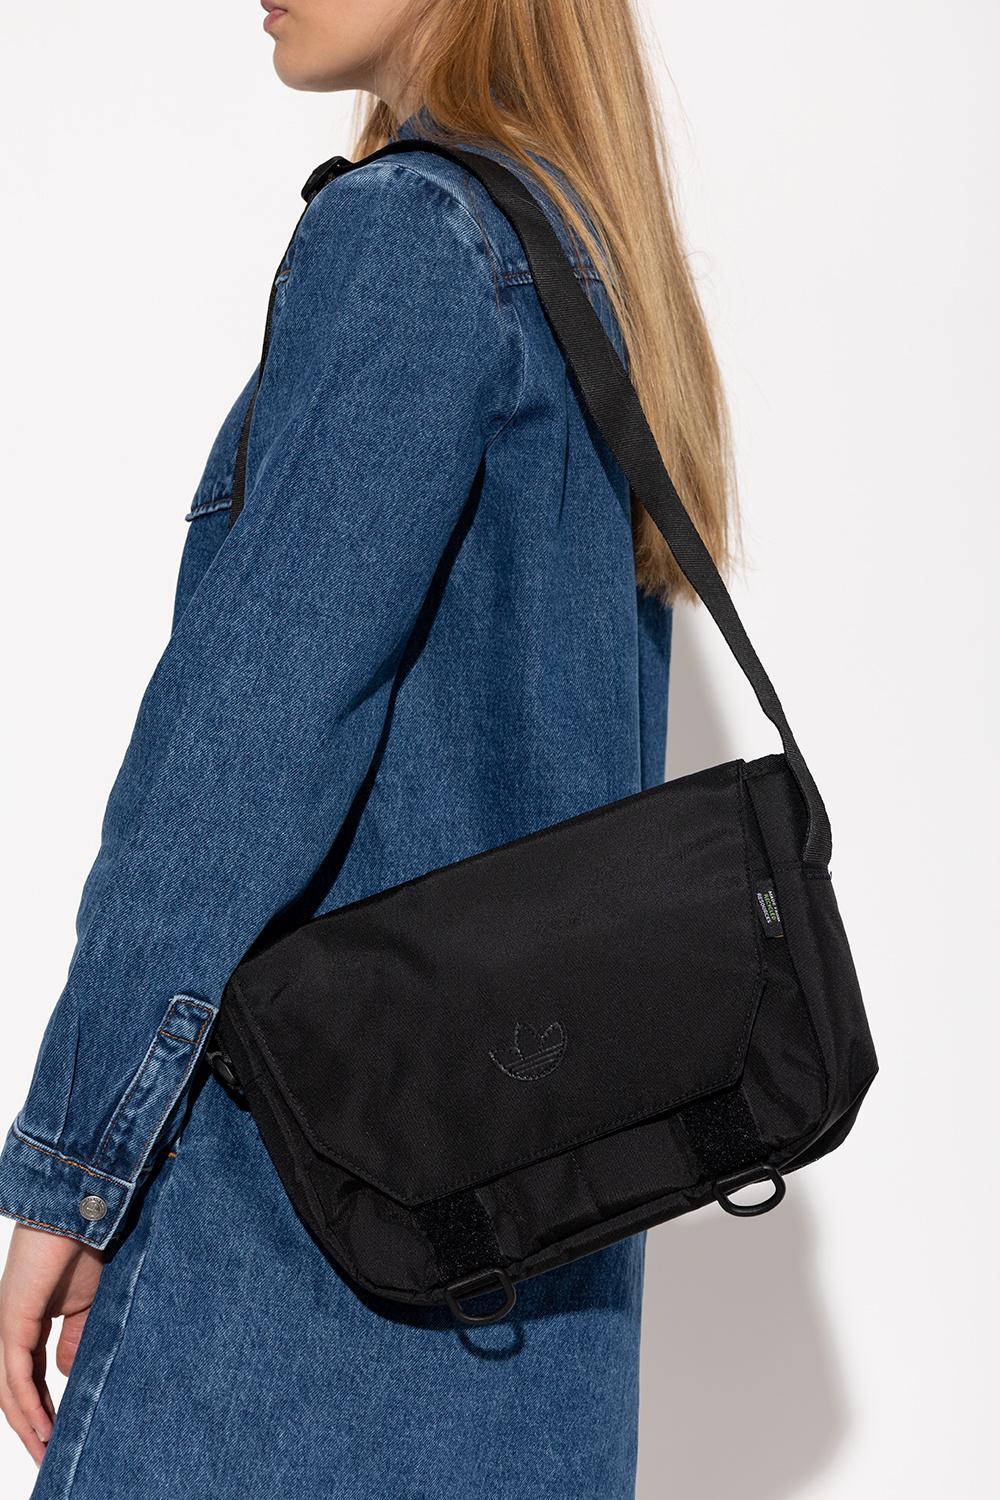 adidas Originals Shoulder Bag With Logo in Black | Lyst